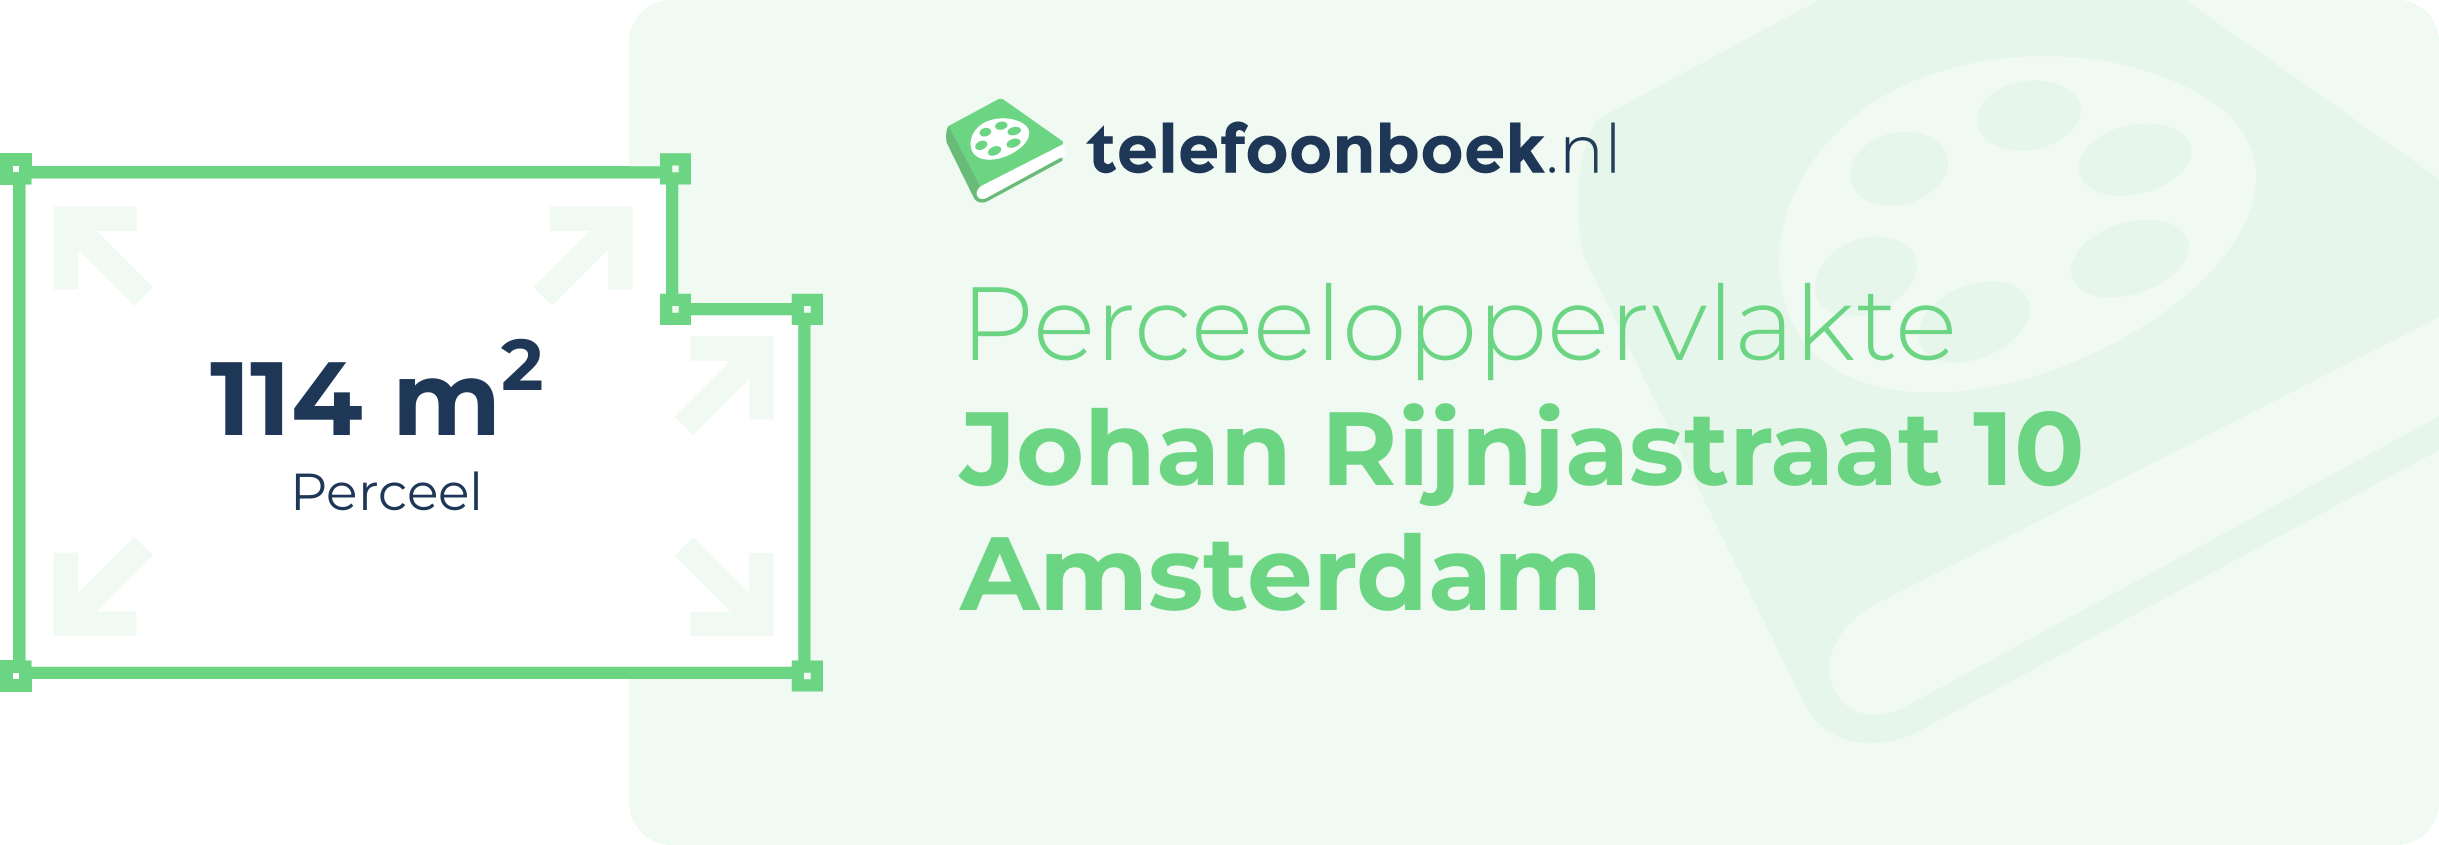 Perceeloppervlakte Johan Rijnjastraat 10 Amsterdam